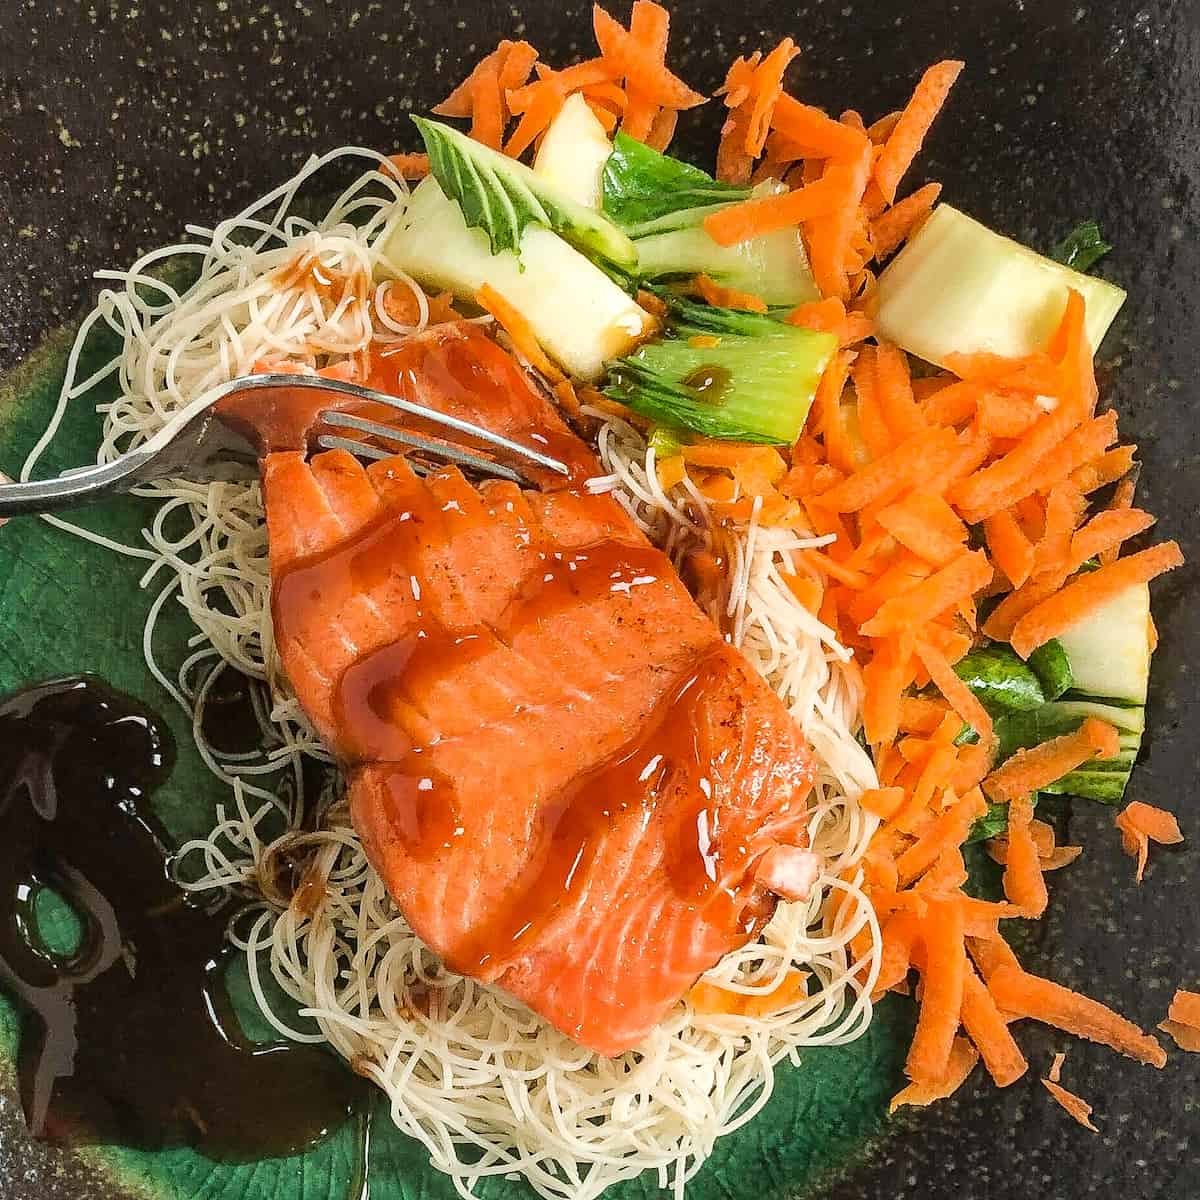 salmon and veggies on black plate drizzled with teriyaki sauce